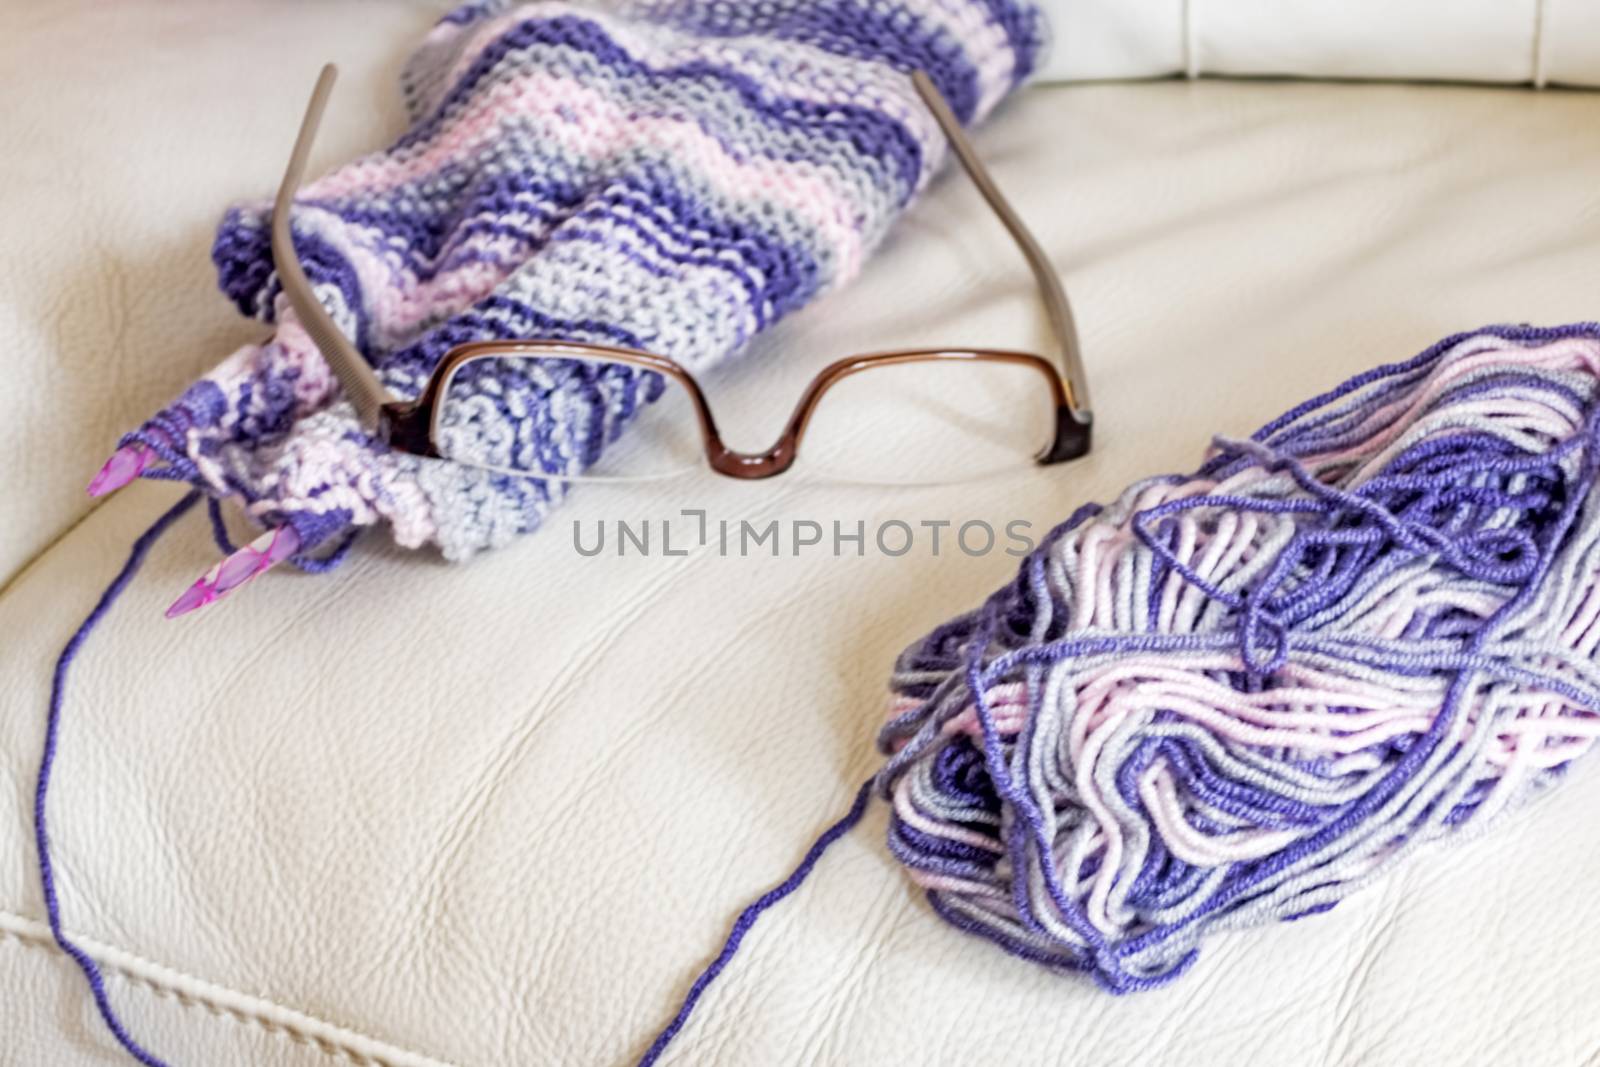 wool and needles for knitting by yilmazsavaskandag